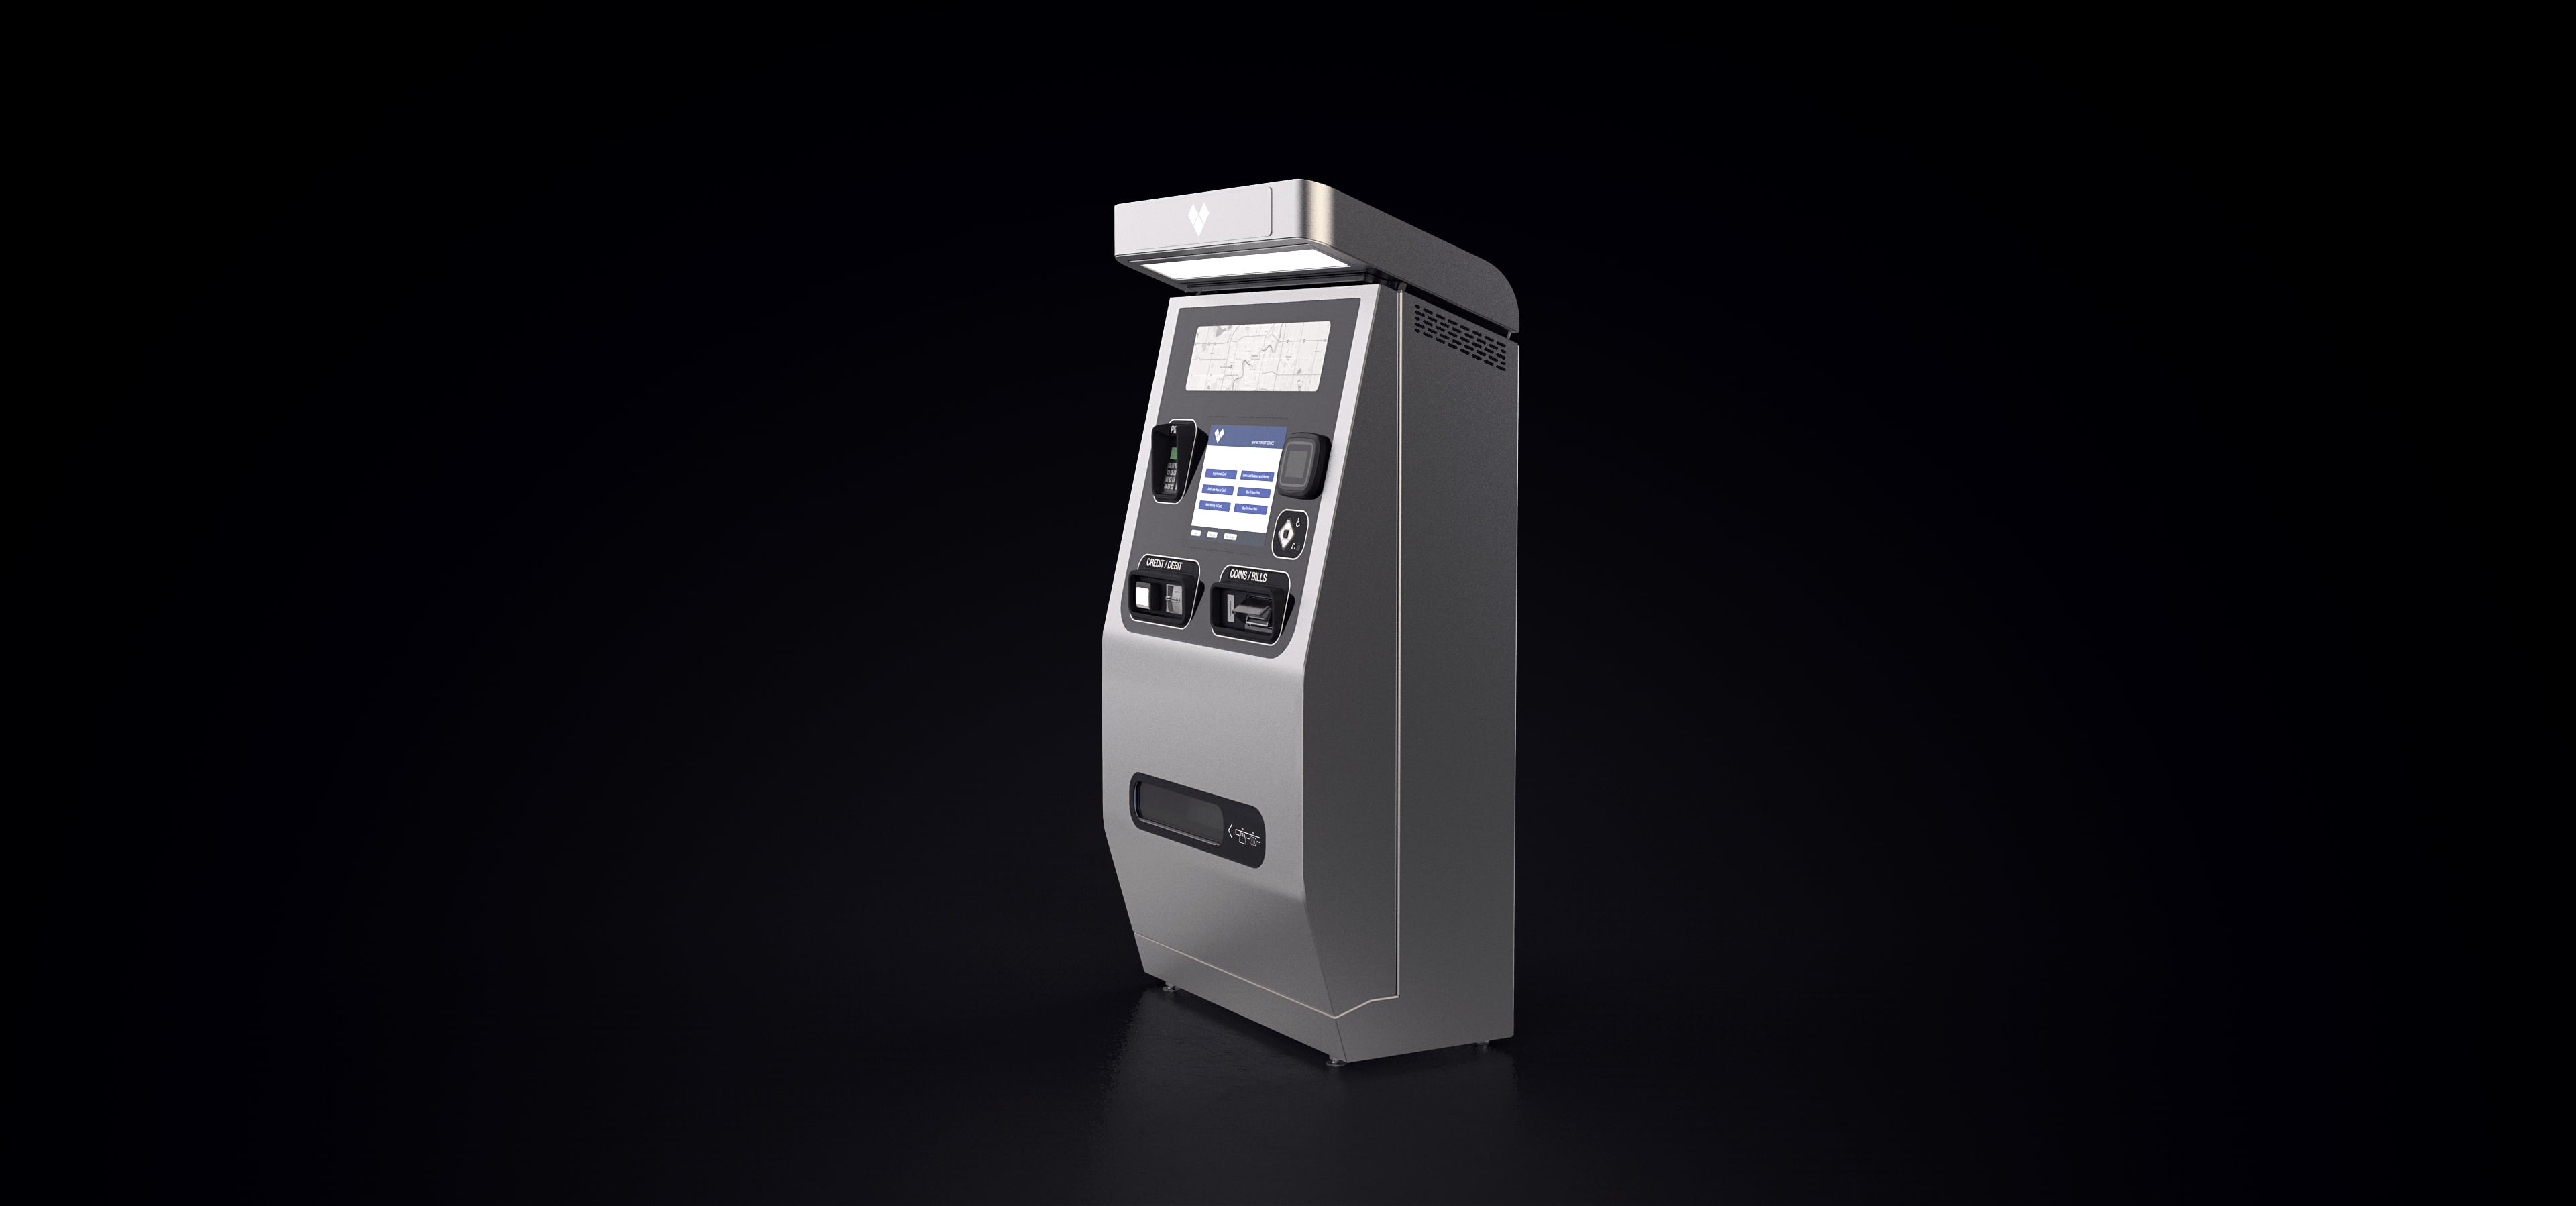 ventek-smart-fare-vending-machine-good-design